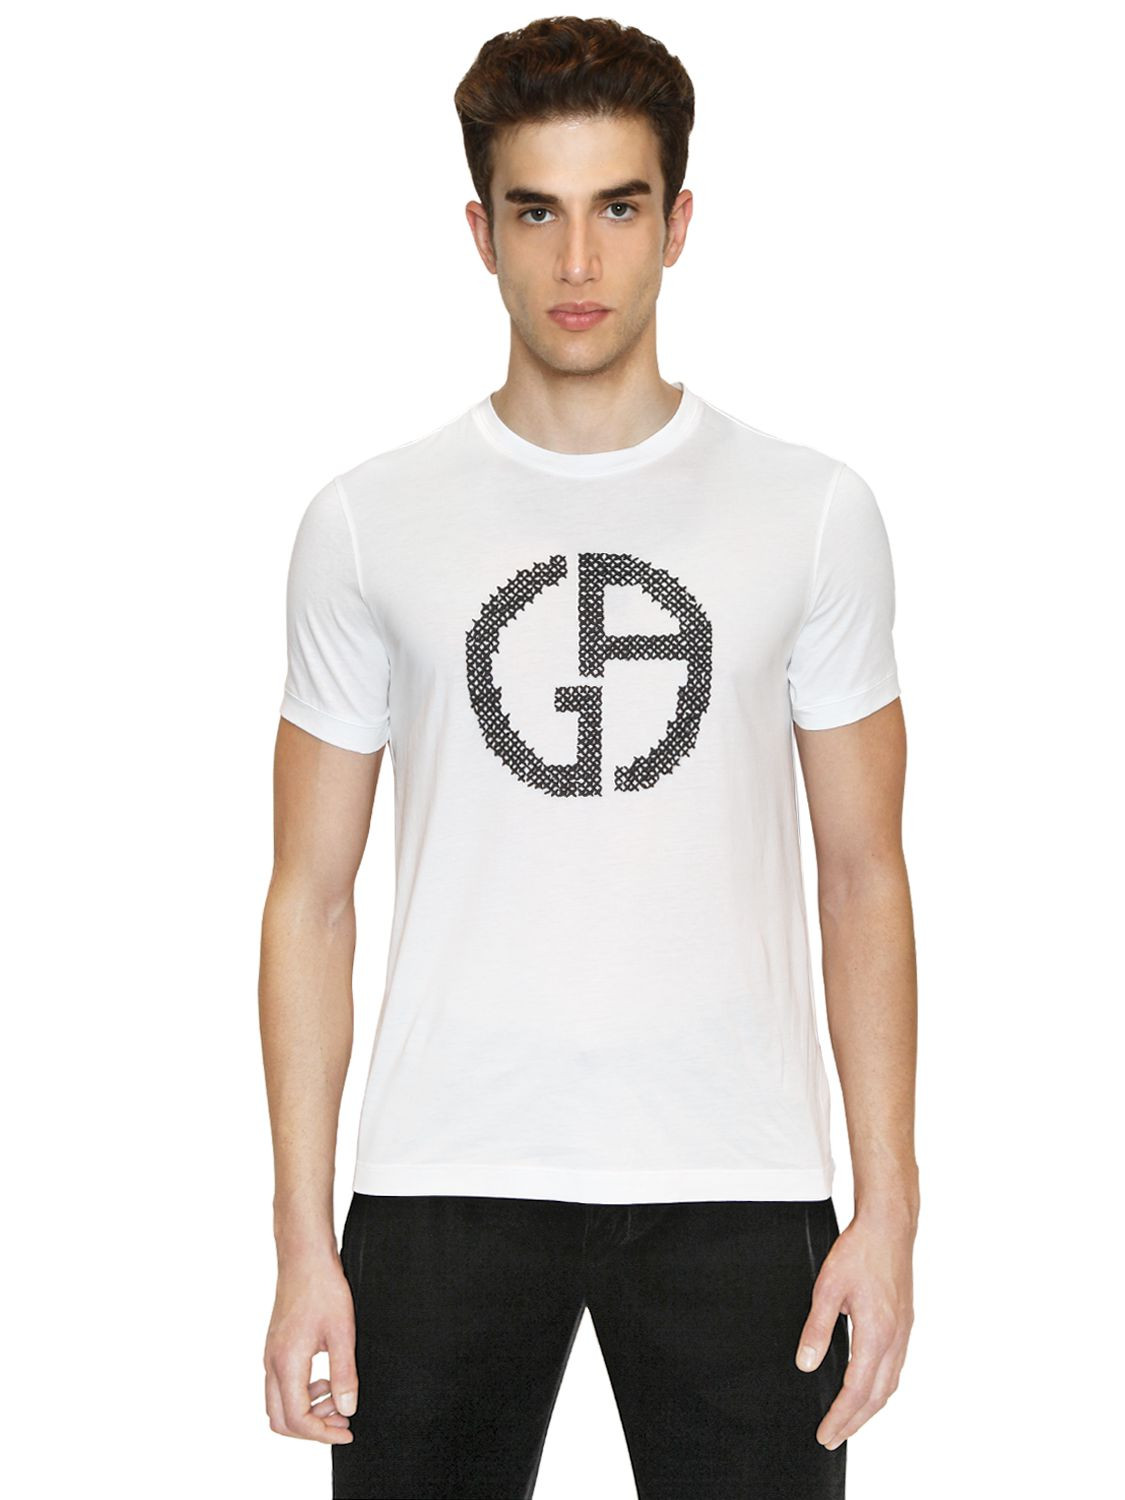 Lyst - Giorgio Armani Logo Embroidered Cotton Jersey T-Shirt in White ...